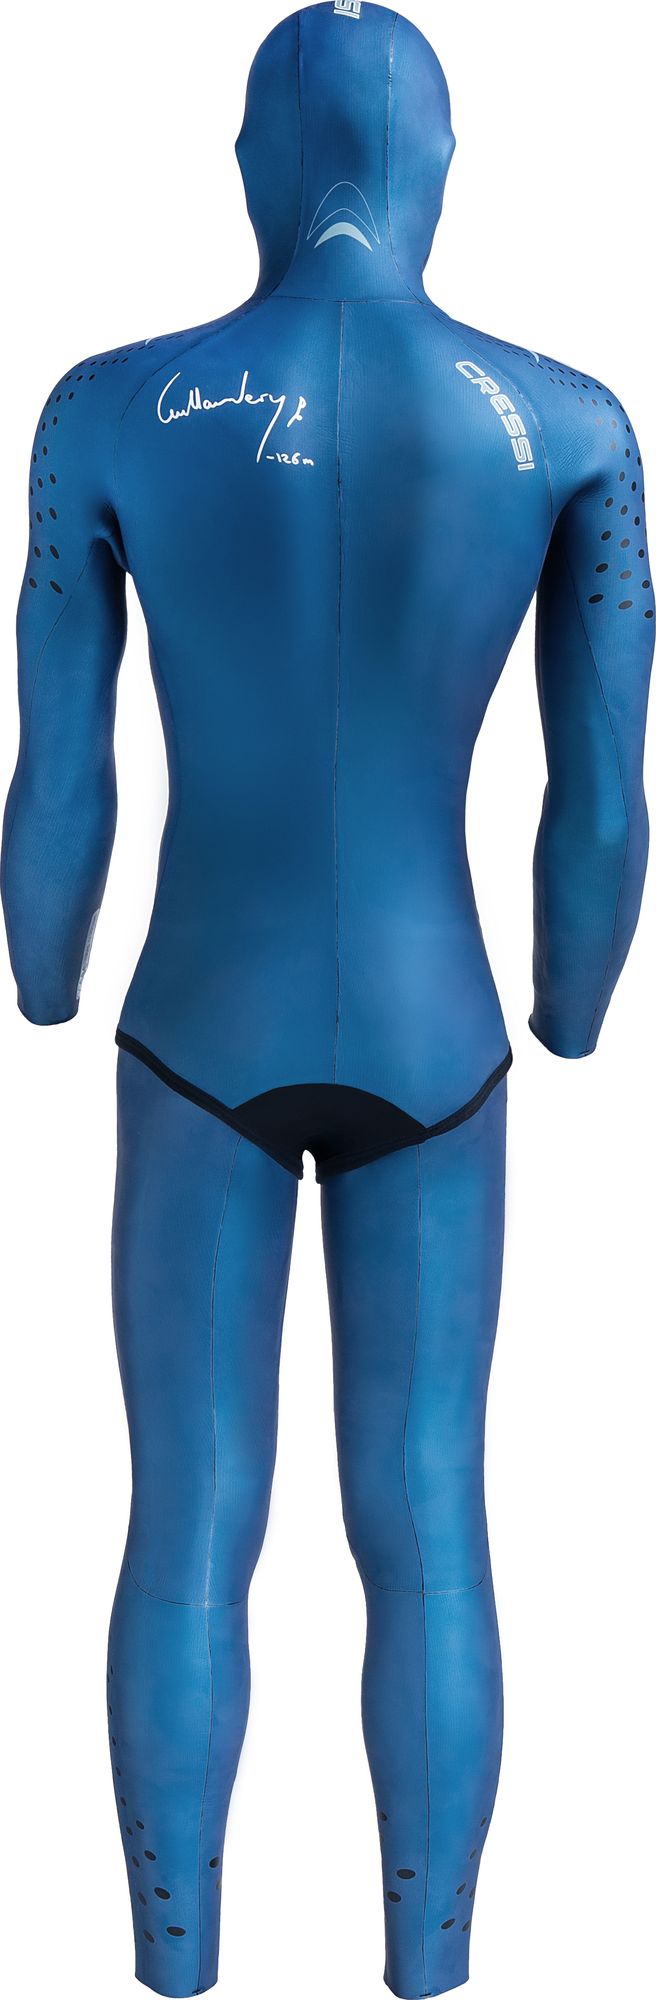 Cressi Free Wetsuit Man muta uomo apnea muta mute umid due pezz freediving neoprene wetsuit long sleeve two-pieces man